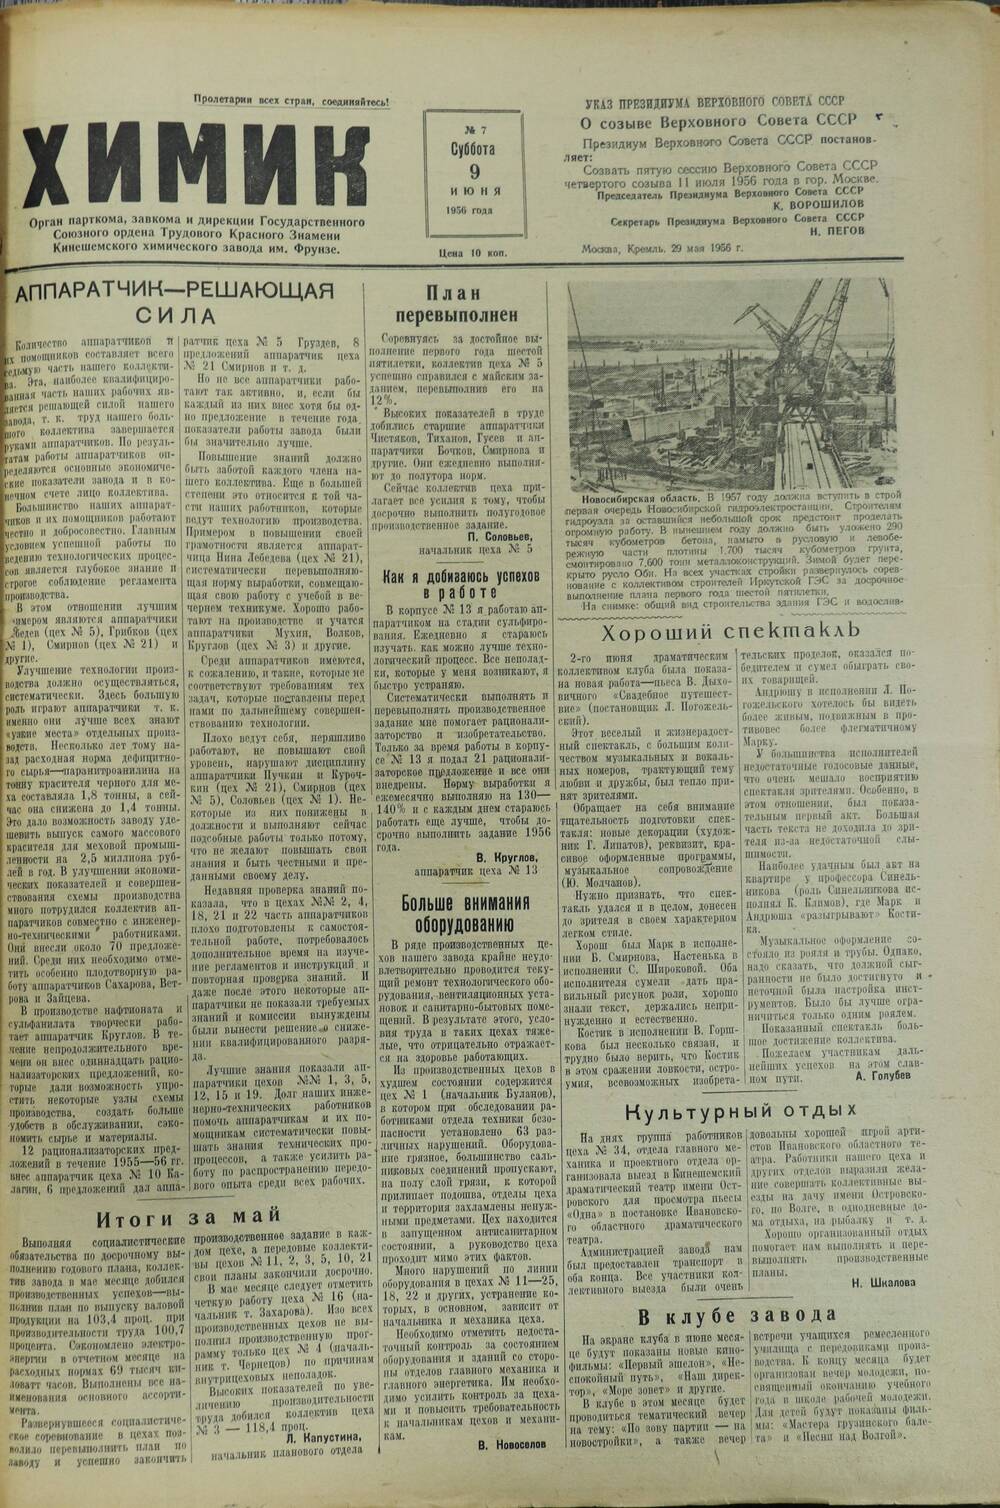 Газета «Химик» № 7 от 9 июня 1956 года.